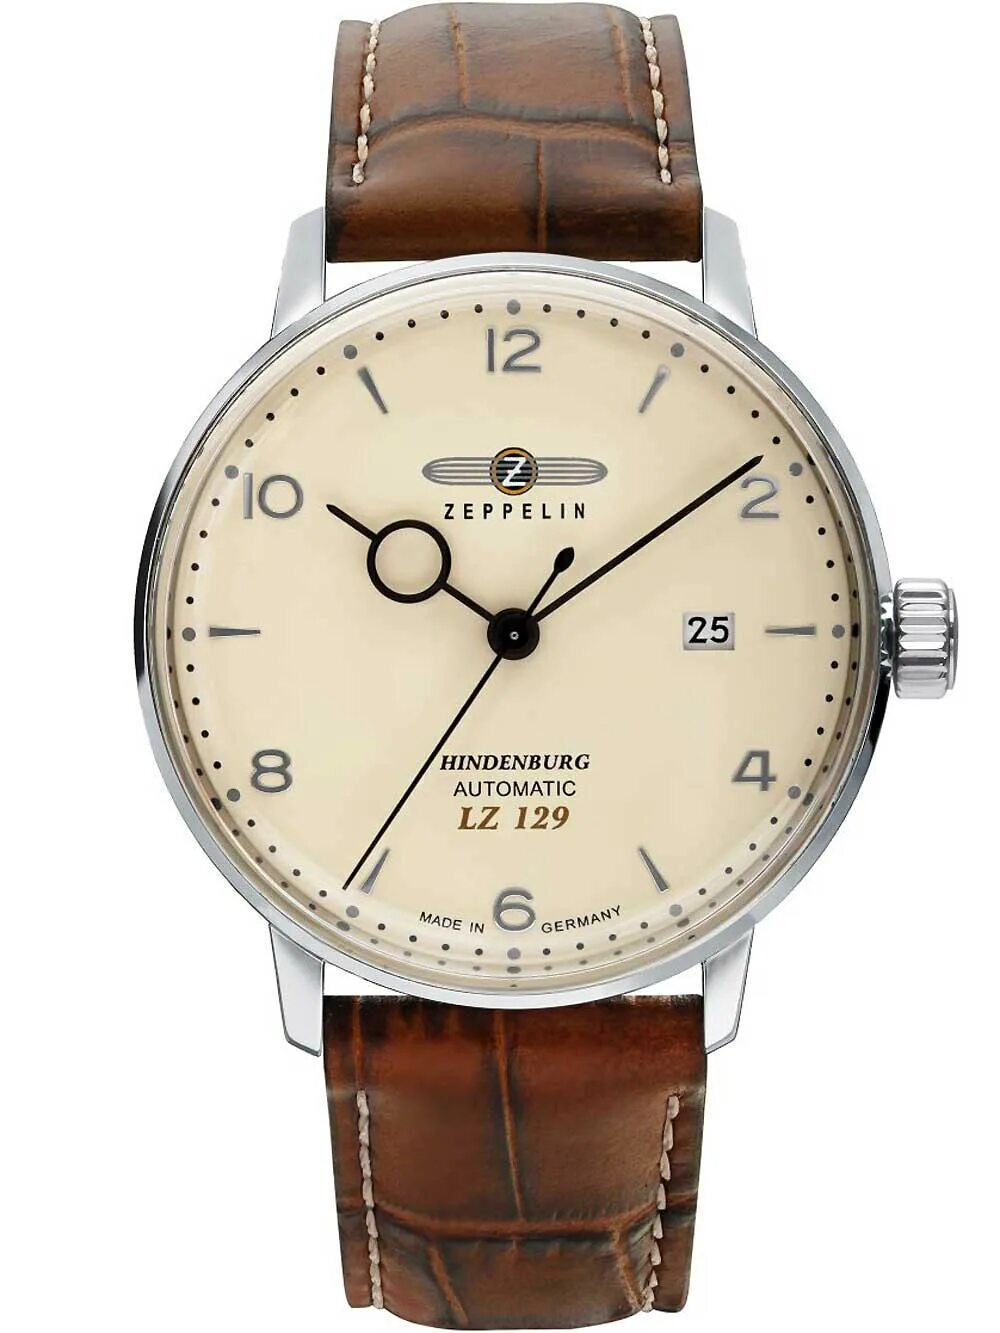 Мужские часы zeppelin. Часы Zeppelin LZ 129. Zeppelin lz129 Hindenburg часы. Наручные часы Zeppelin Zep-80425. Часы мужские Zeppelin LZ 129.